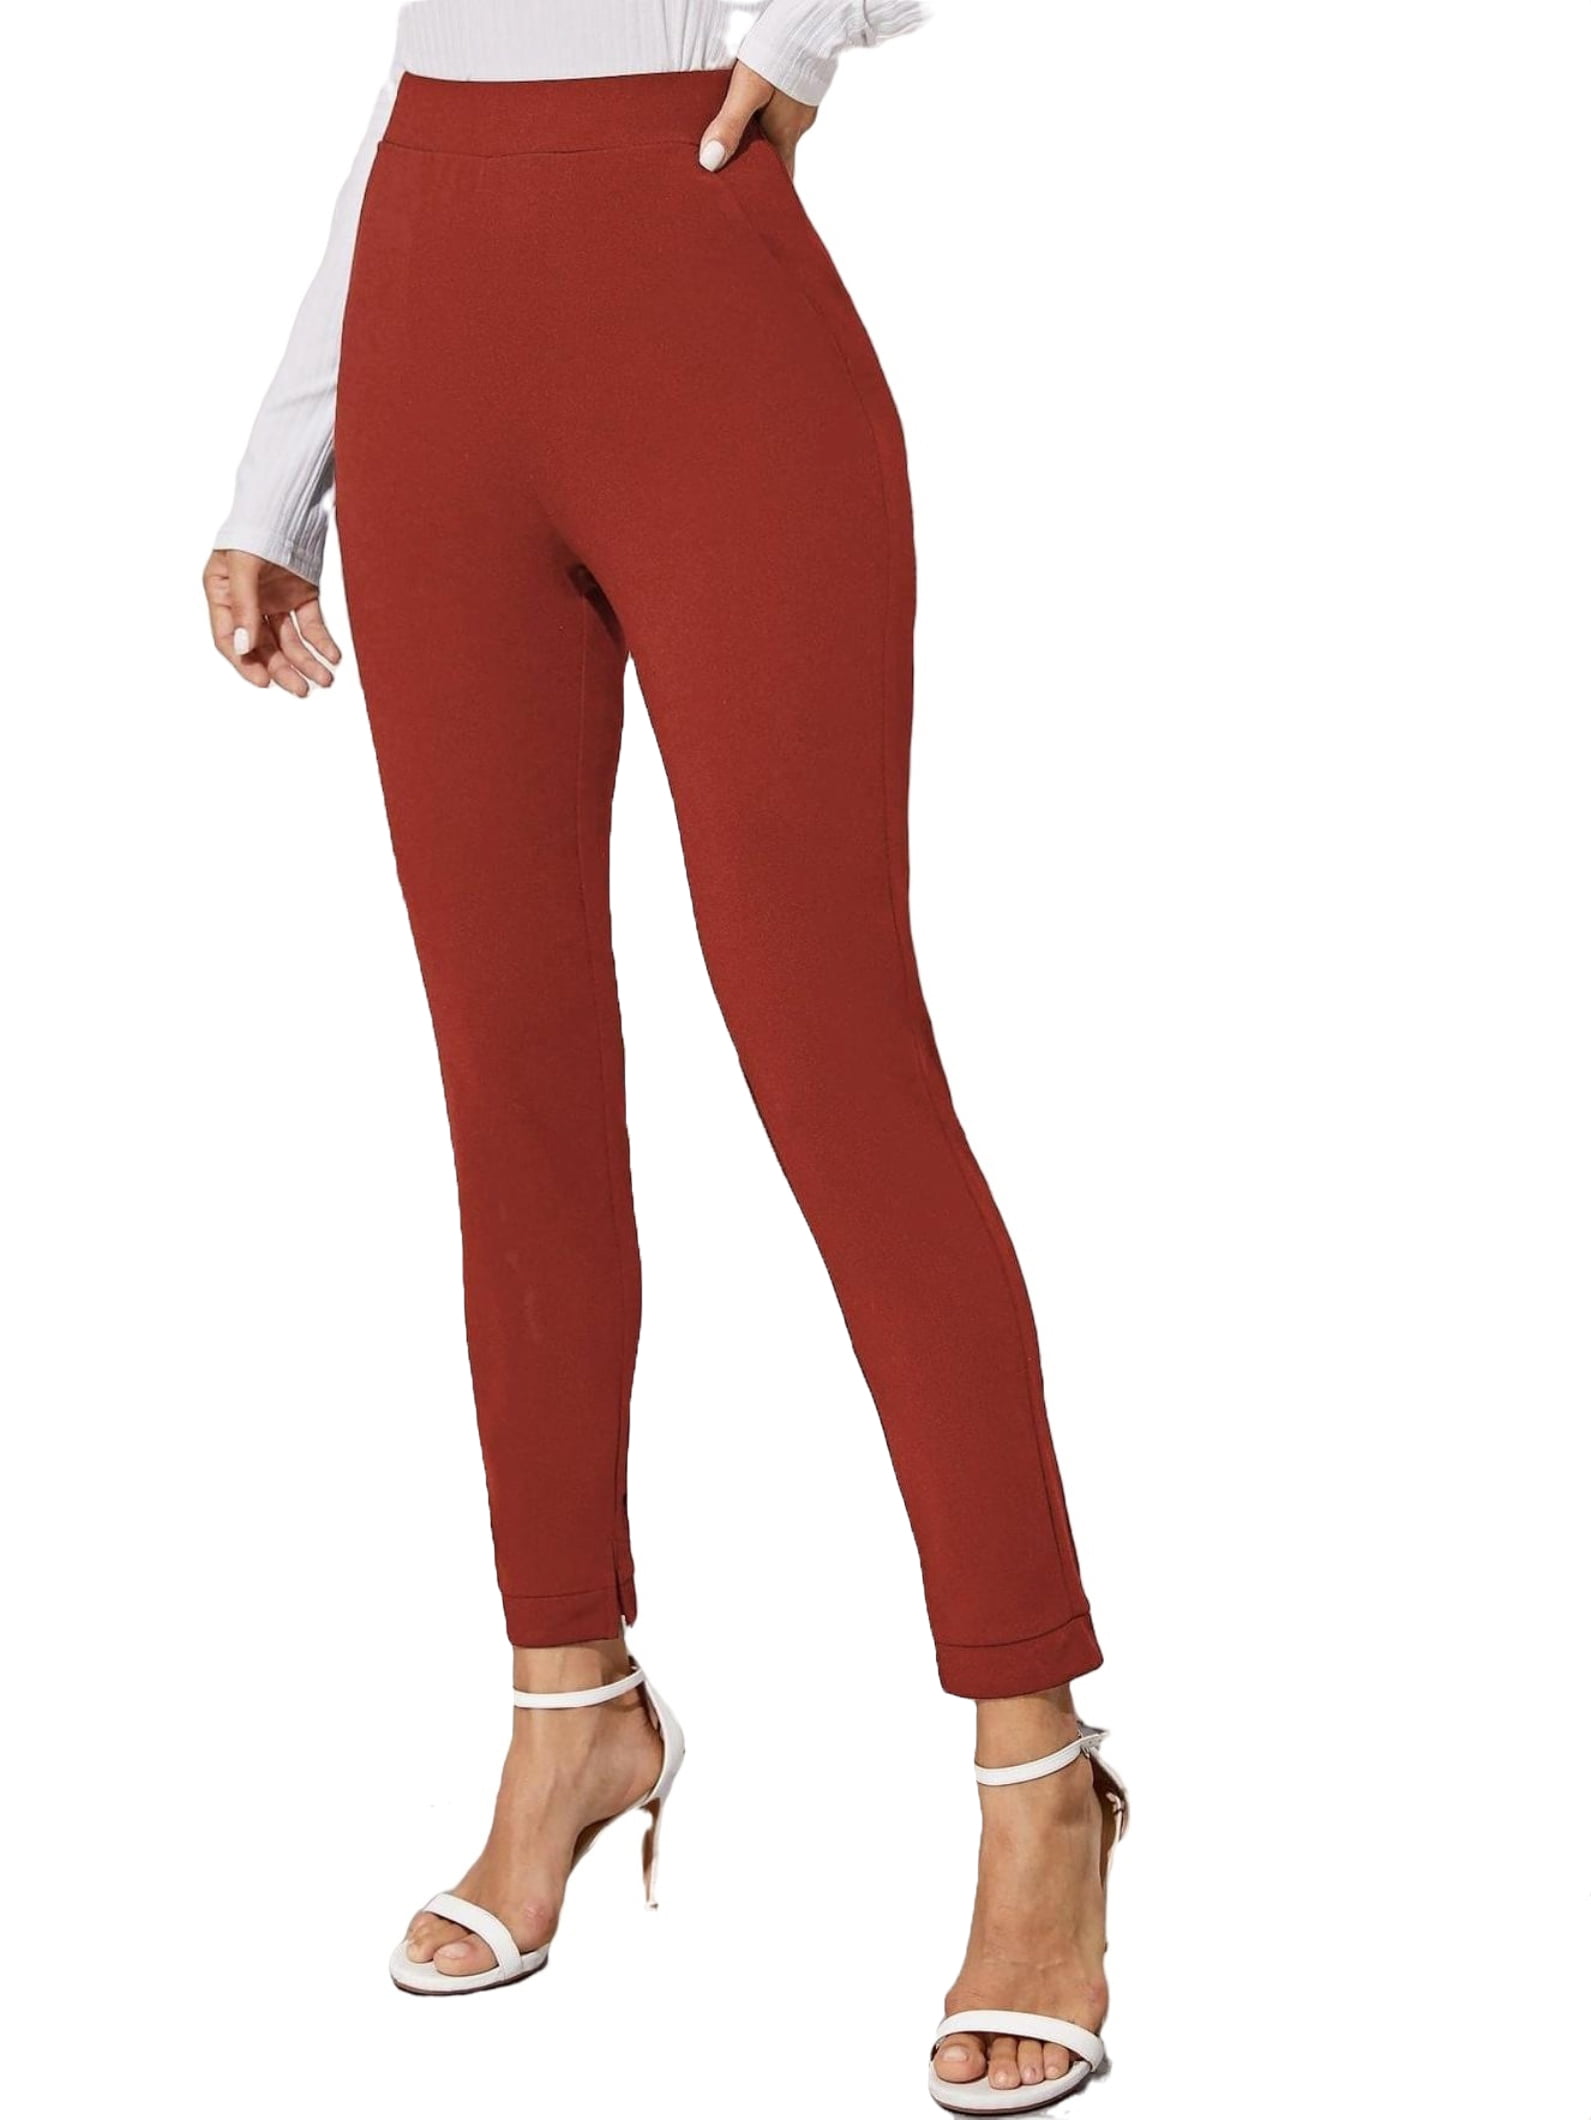 Women's Elegant Plain Skinny Red Pants M